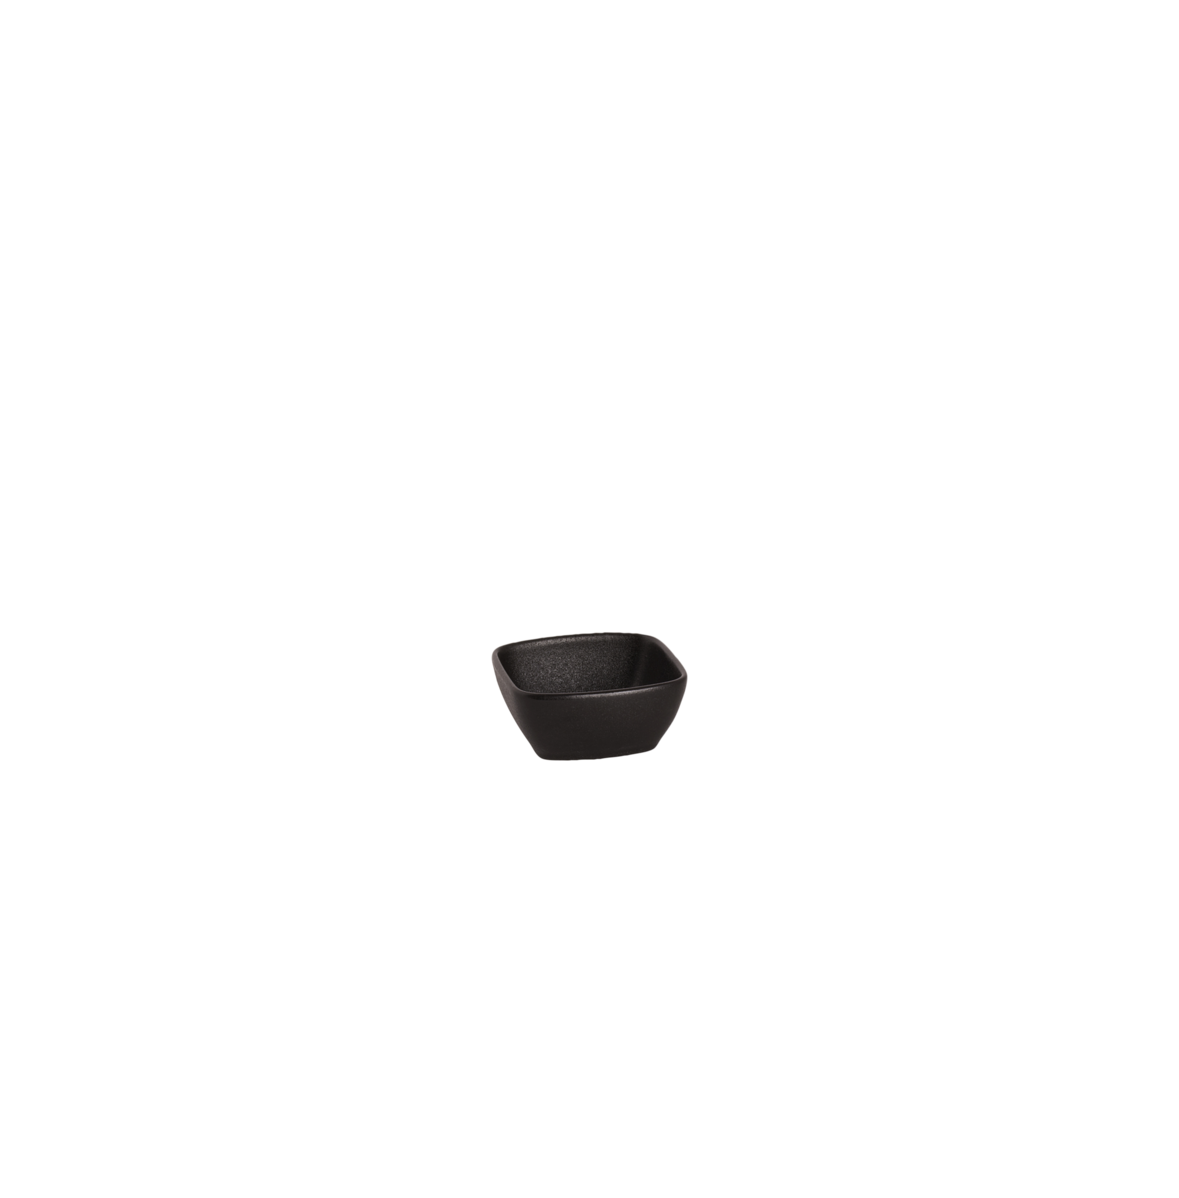 Kommetje 8 cm vierkant Universe black